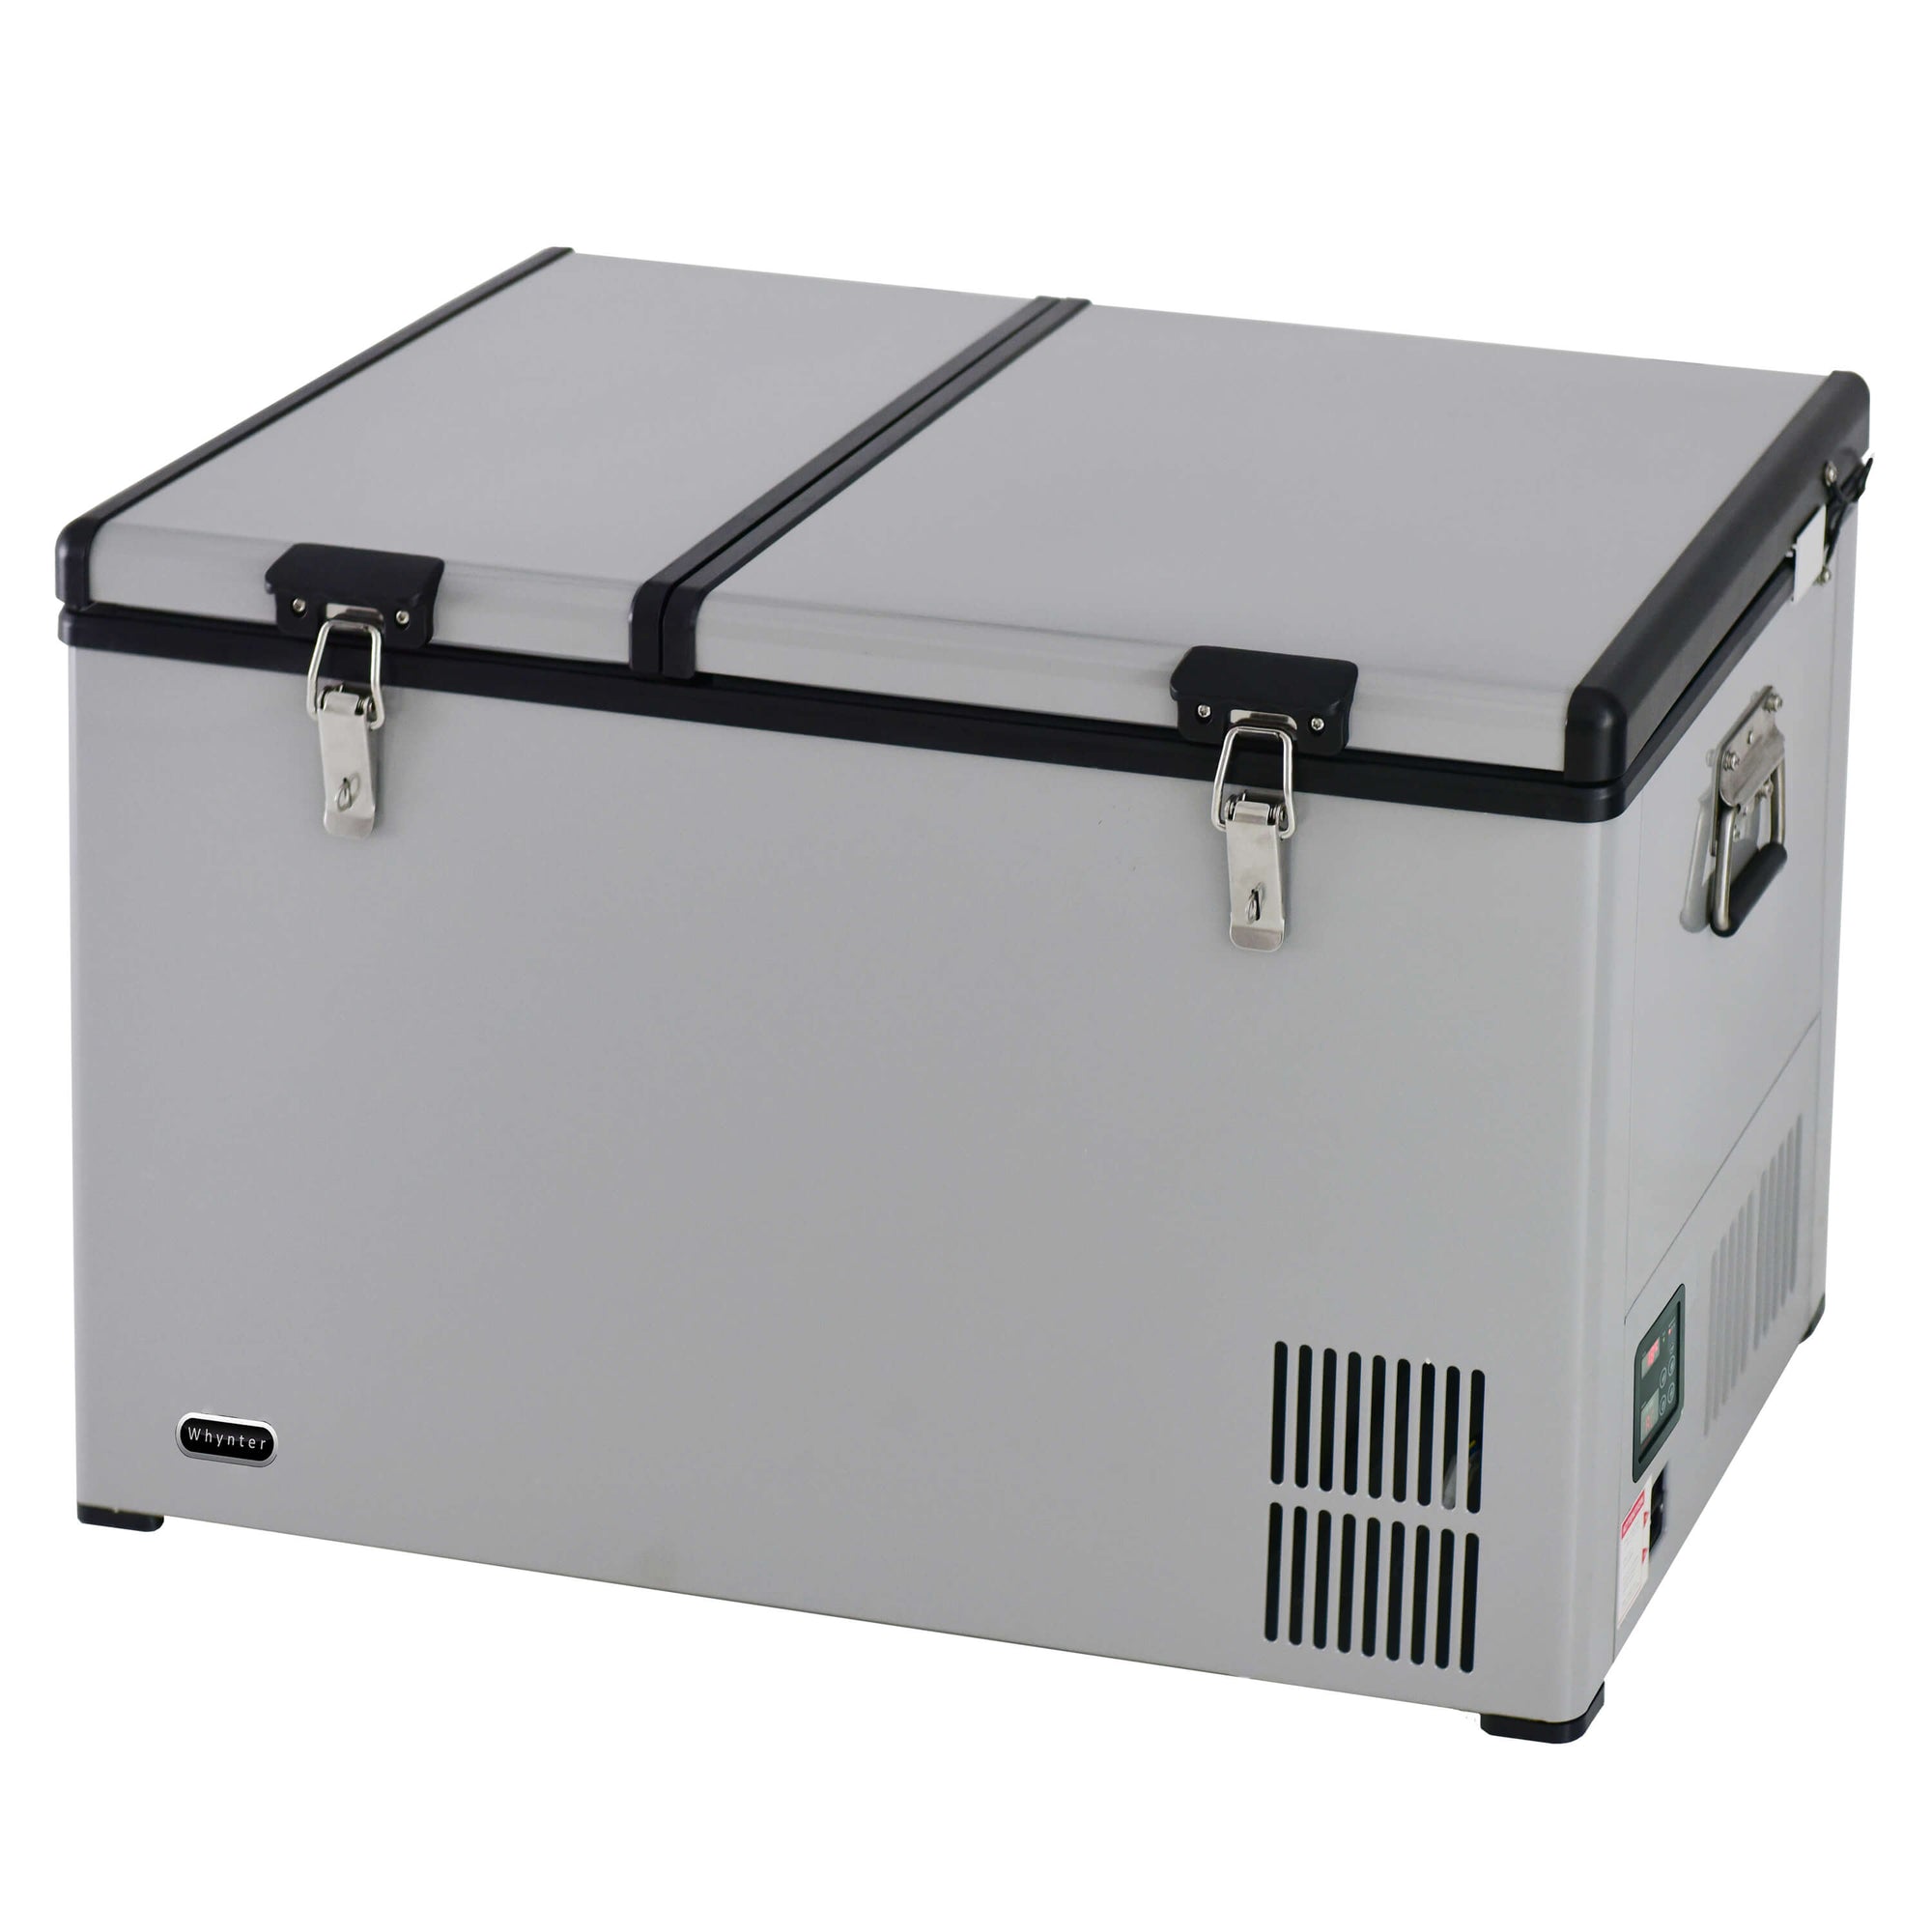 Whynter FM-901DZ 90 Quart 3.0 cu. ft. Dual Zone Portable Fridge/Freezer in Gray New